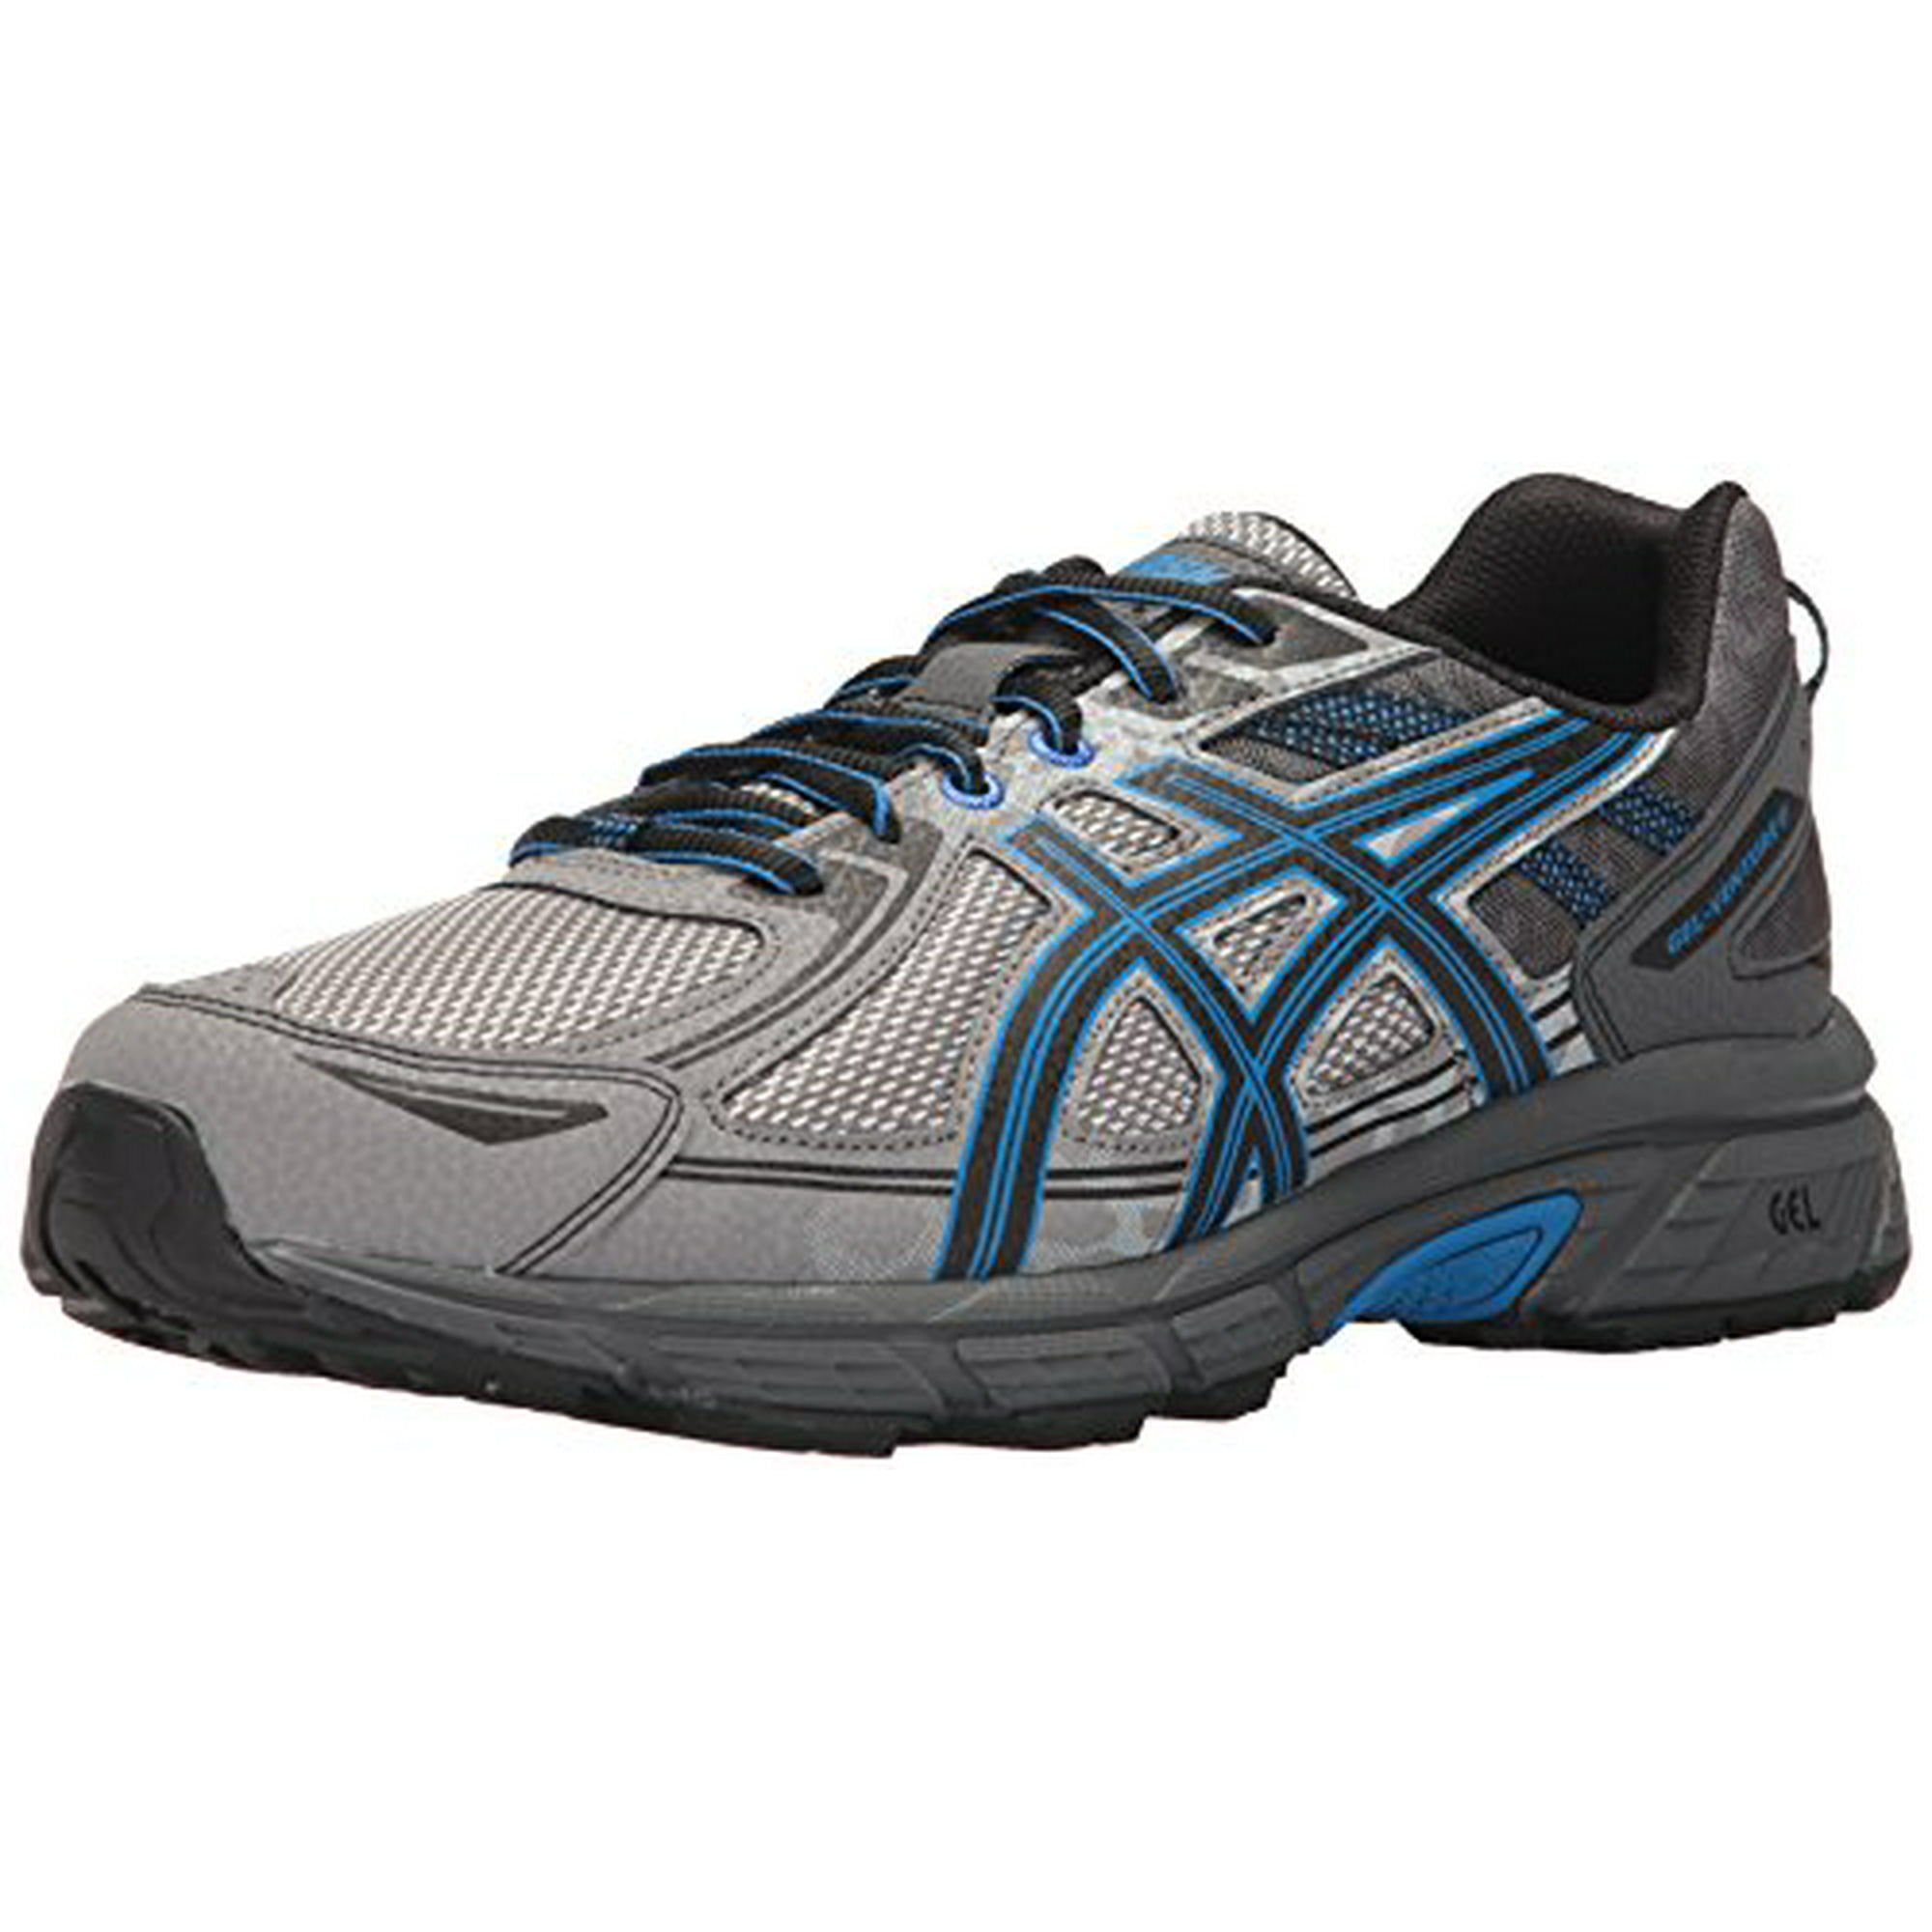 ASICS Men's Gel-Venture 6 Running-Shoes, Blue, 11.5 Medium US -